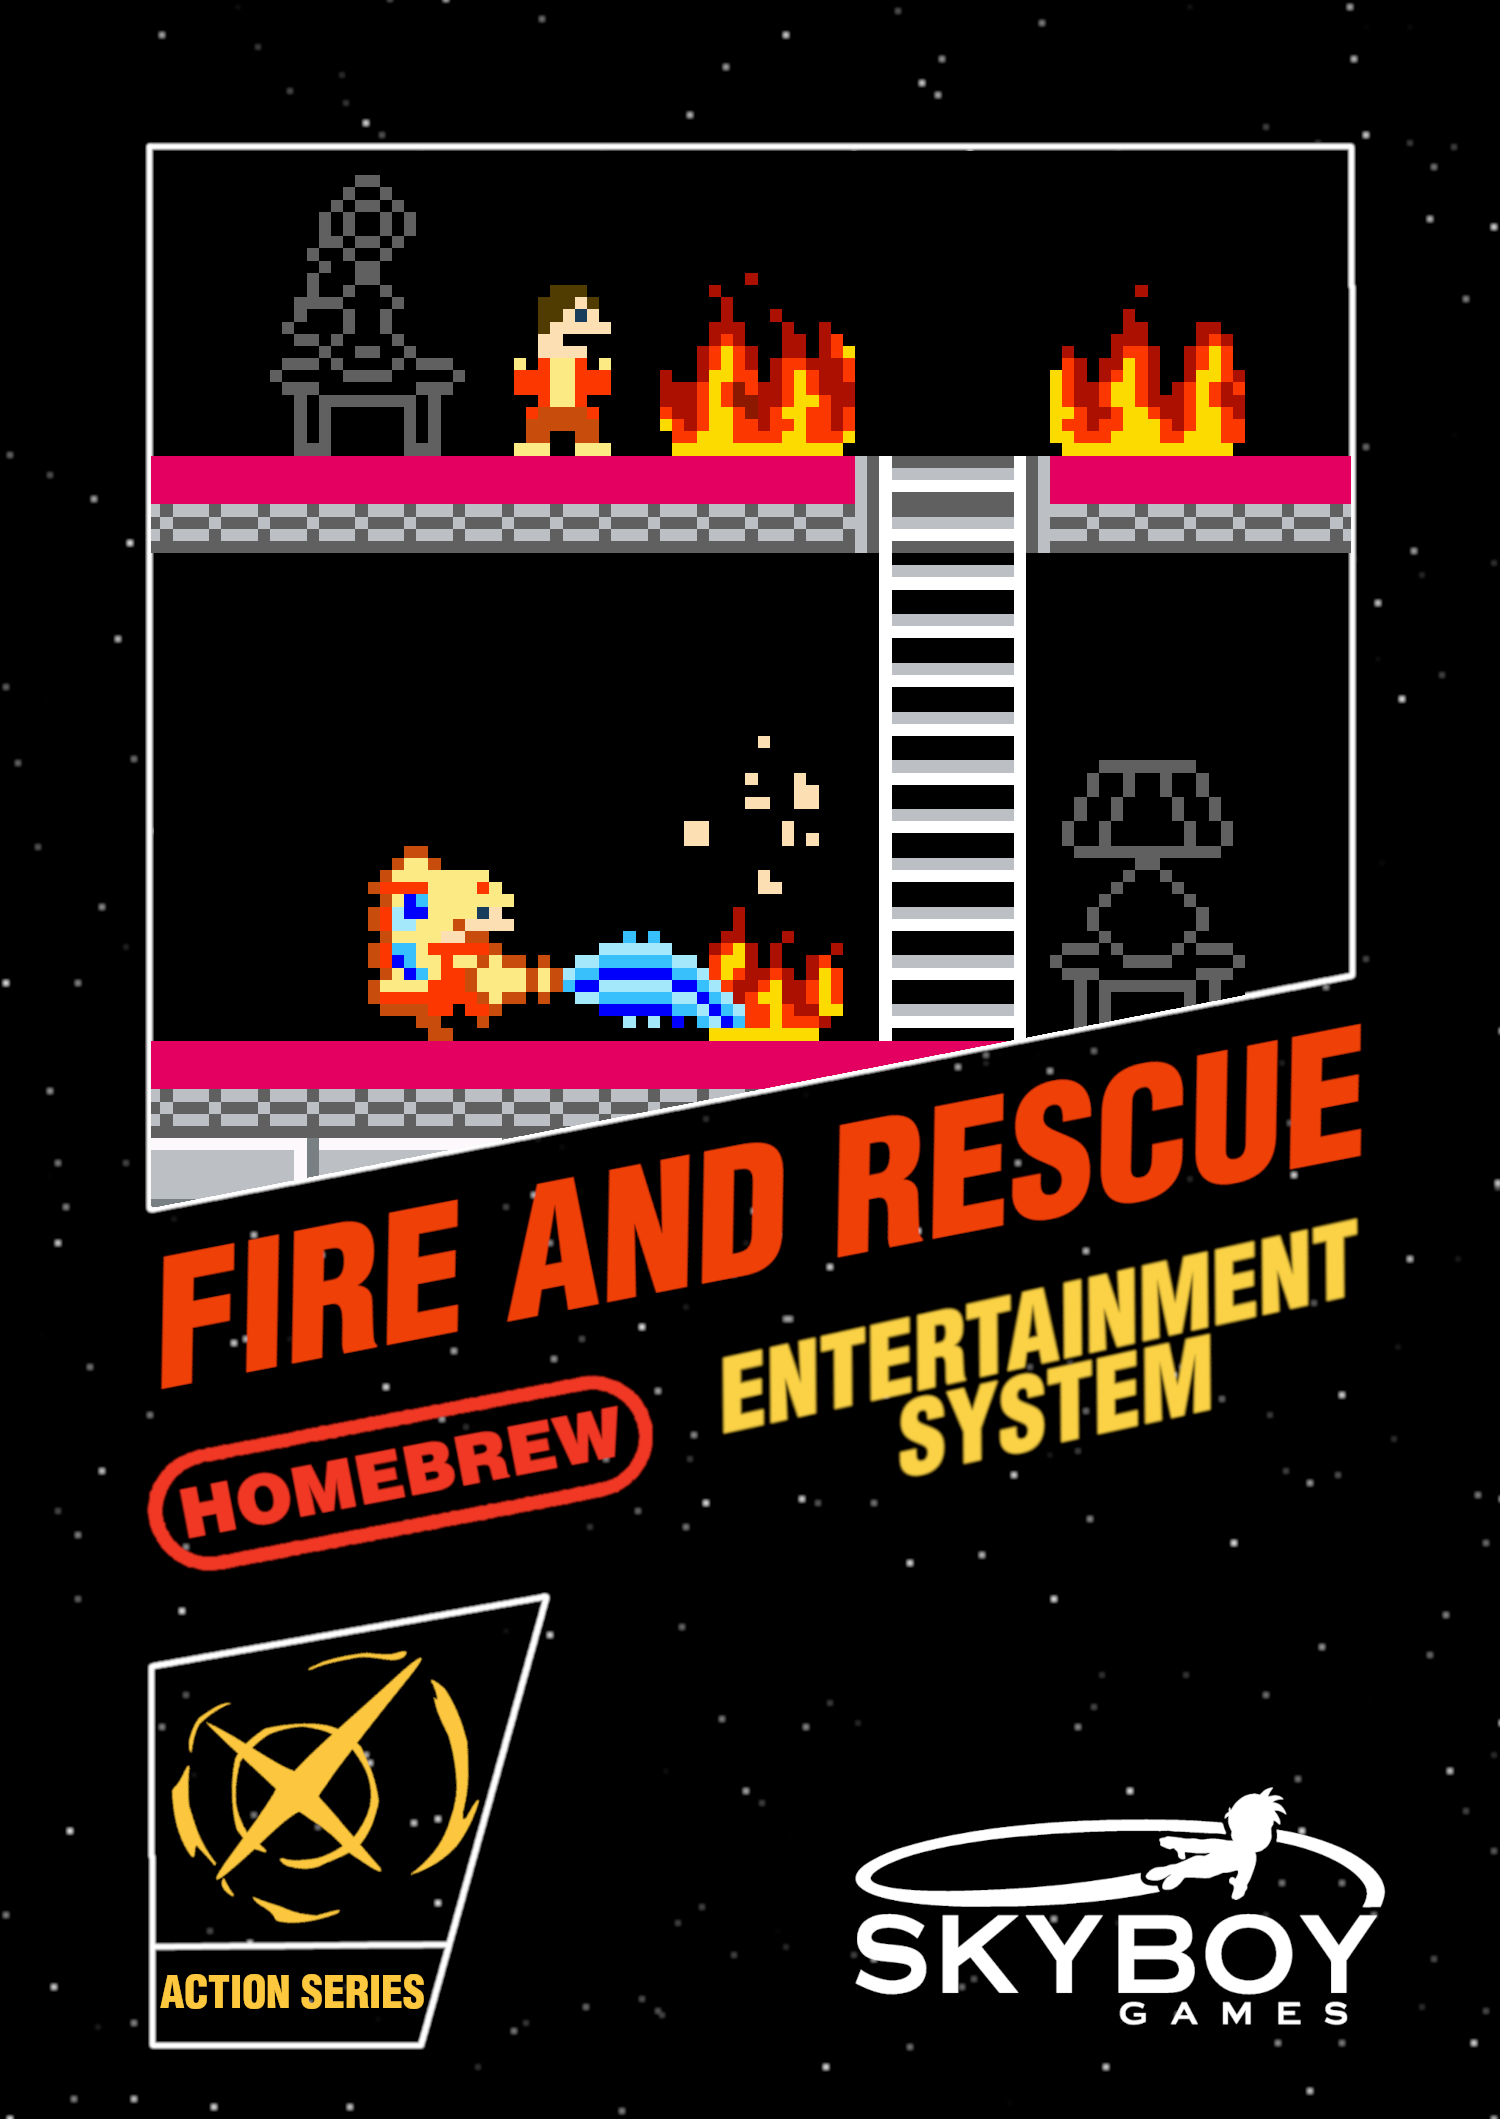 Firehouse Rescue NES. Nintendo fire